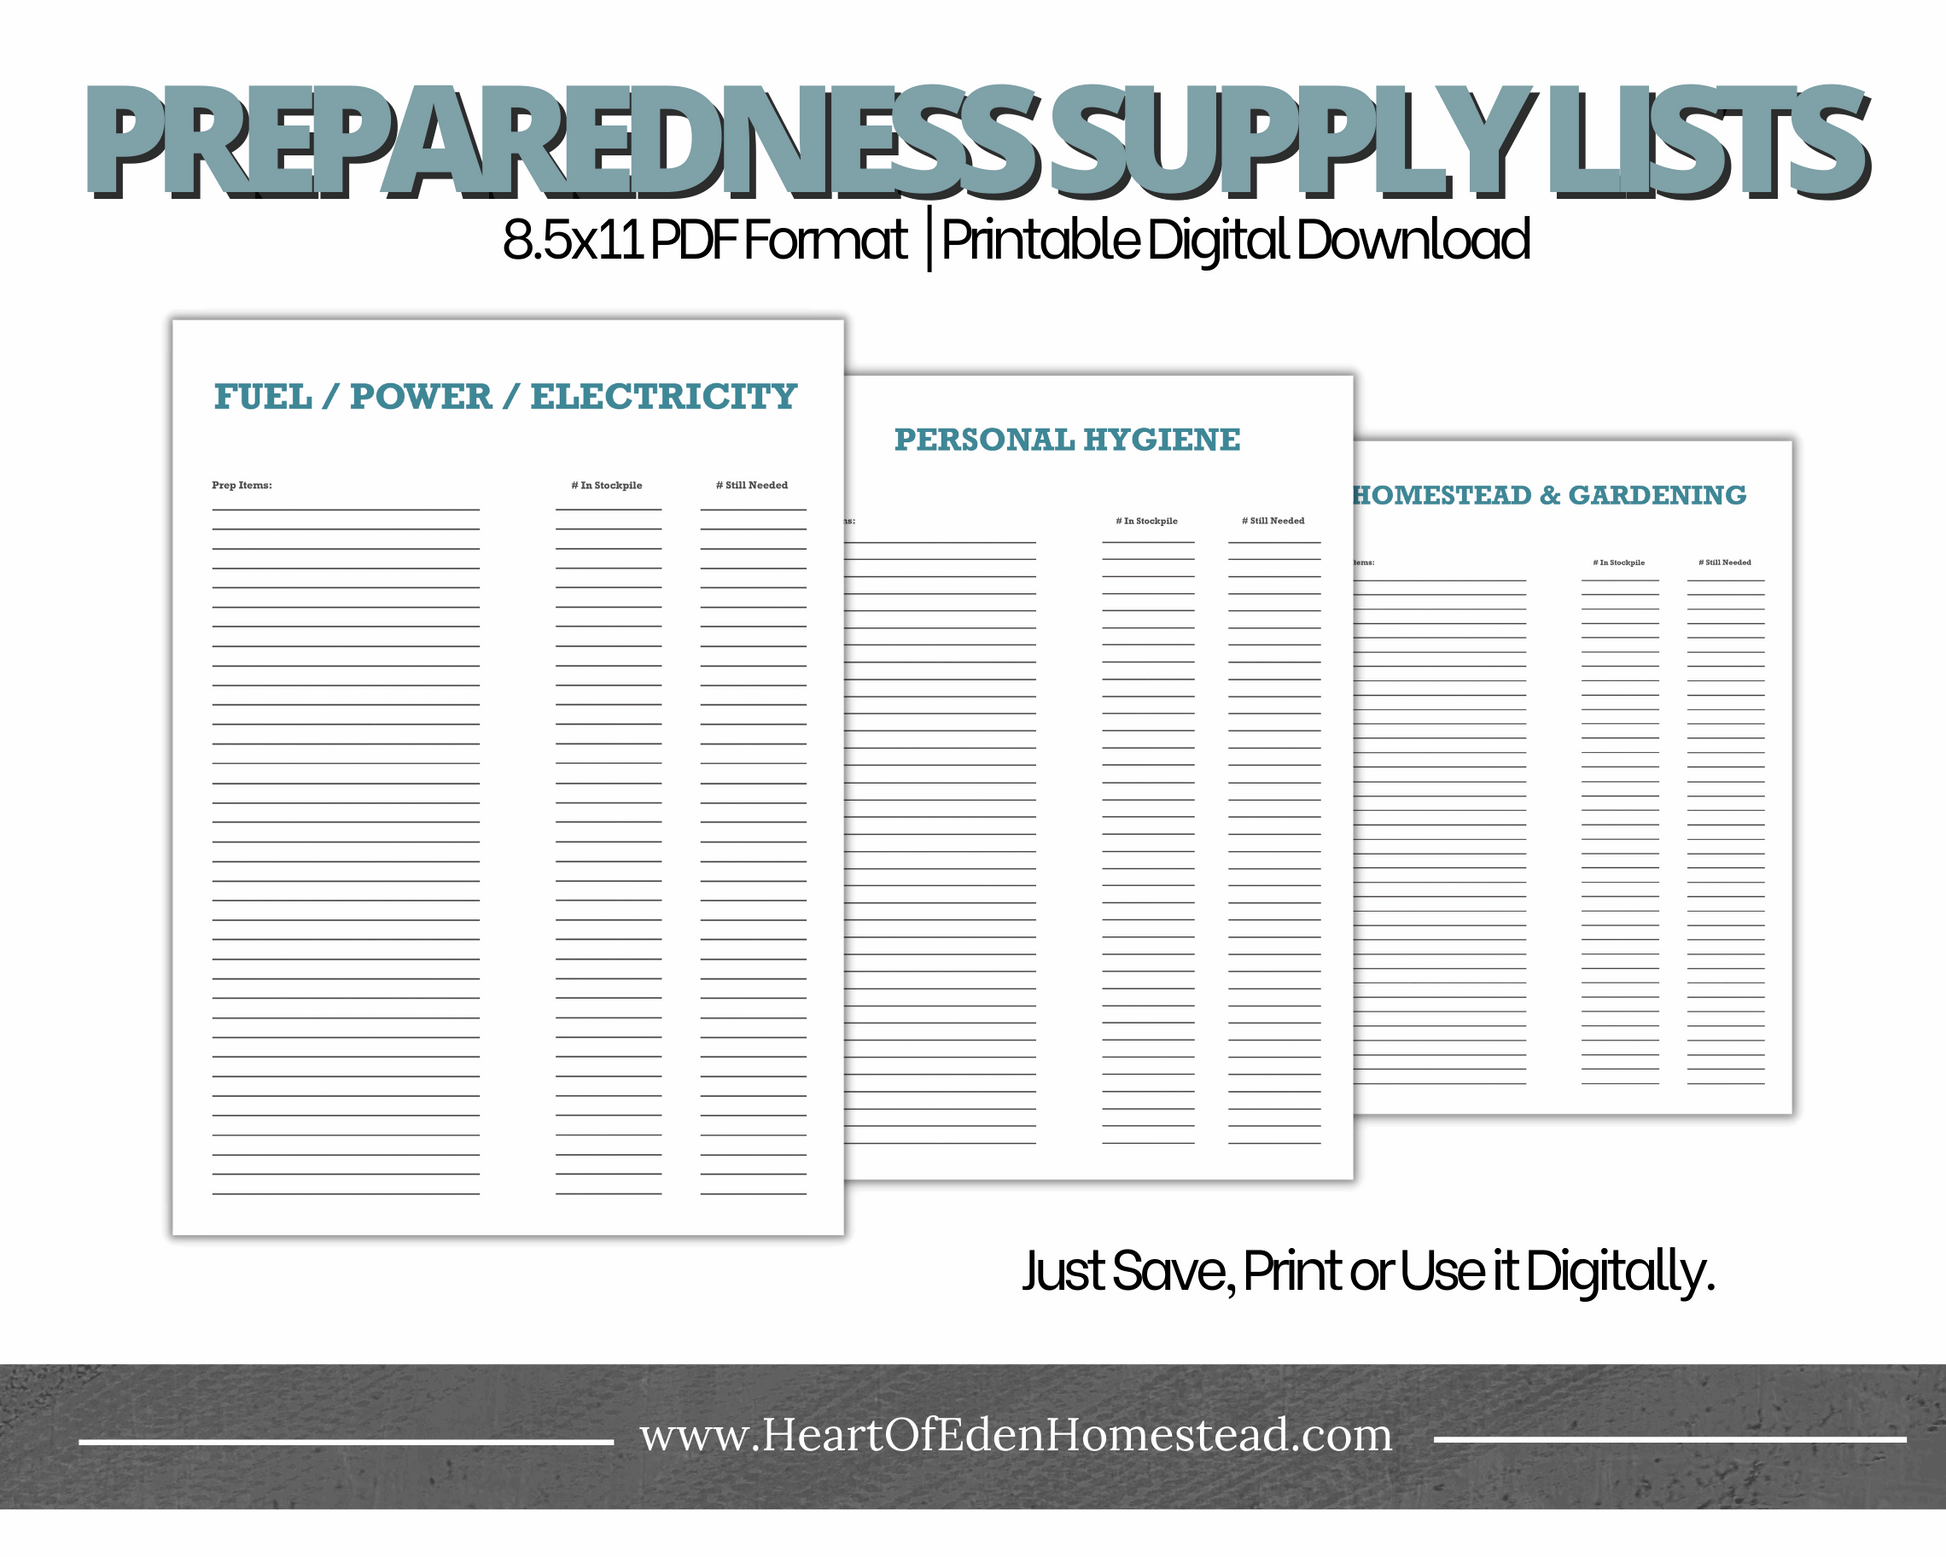 Homesteading supply list: a list for new homesteaders